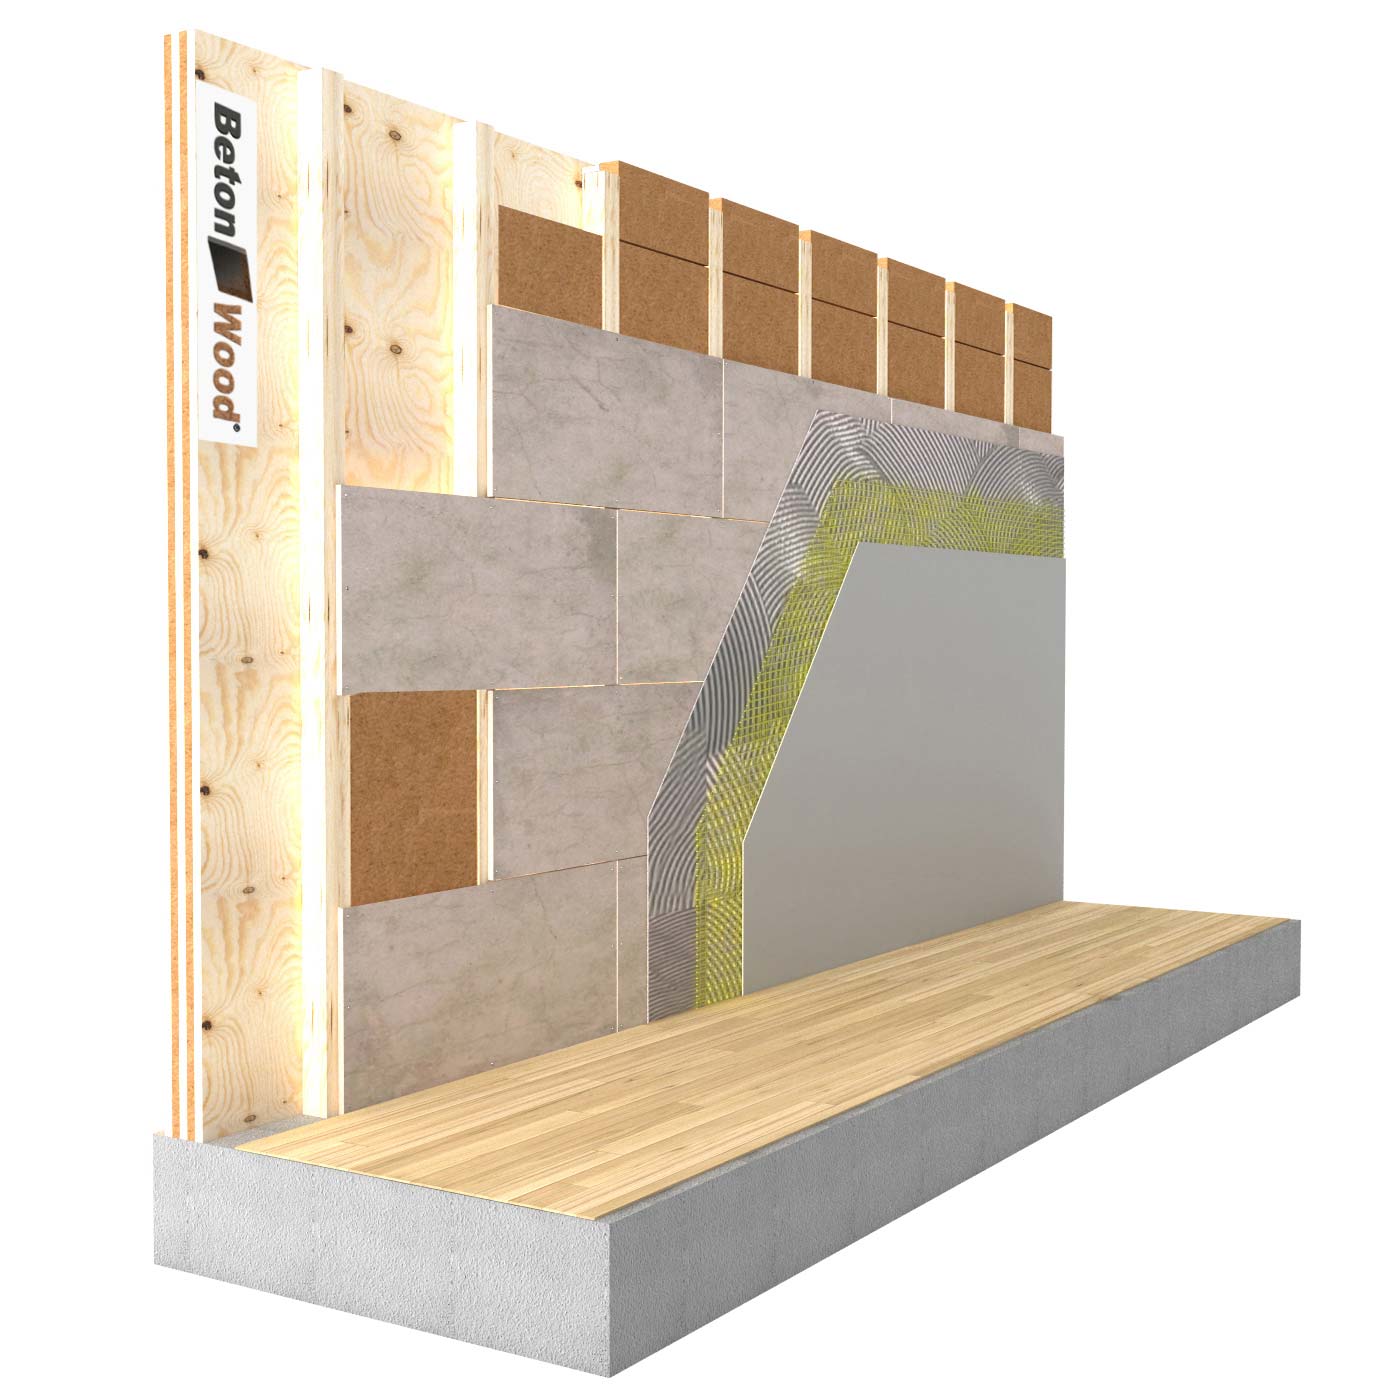 Counterwall insulation in flexible wood fiber Flex on wood